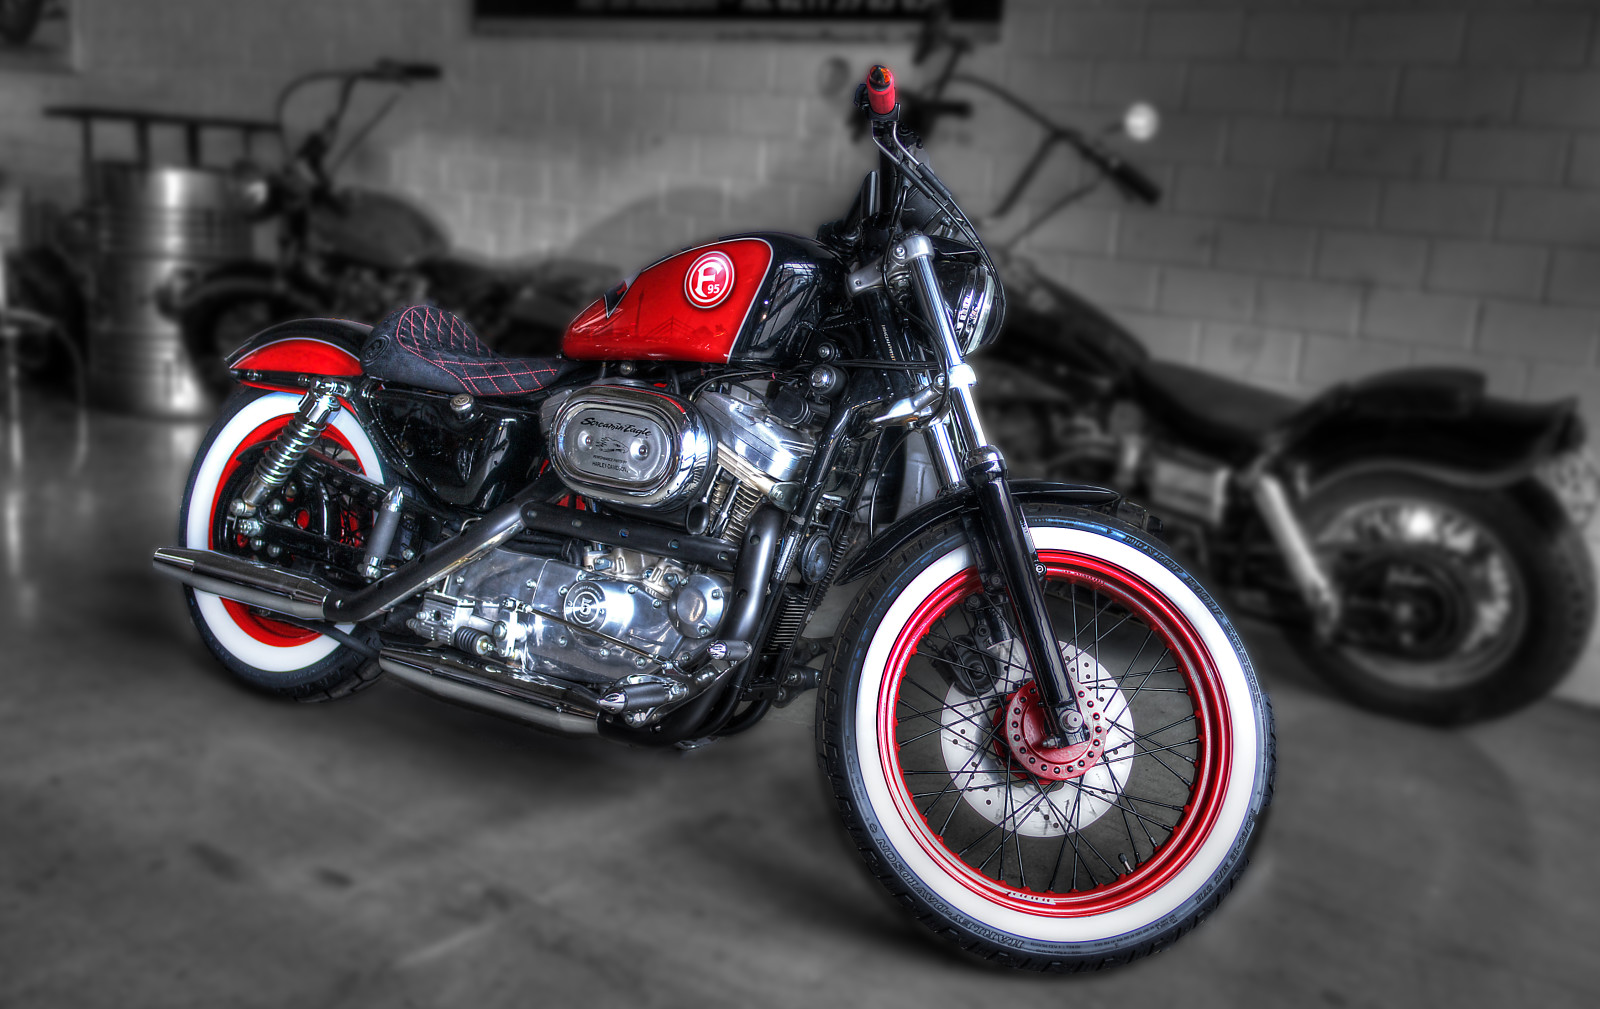 adat, sepeda, Harley Davidson, Harley, f95